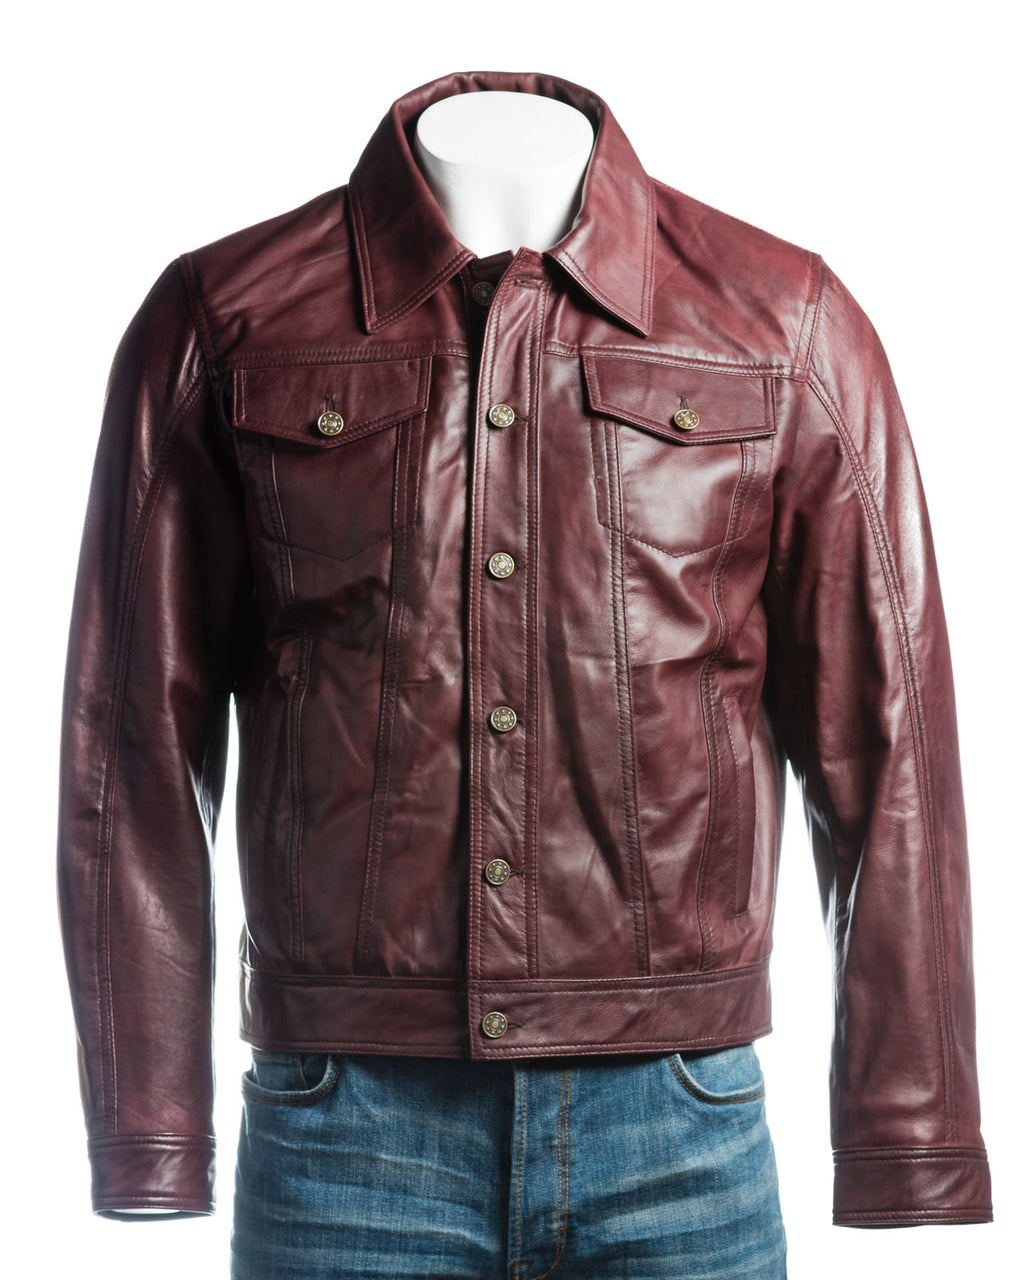 Men's Burgundy Denim Shirt Style Leather Jacket: Antonio